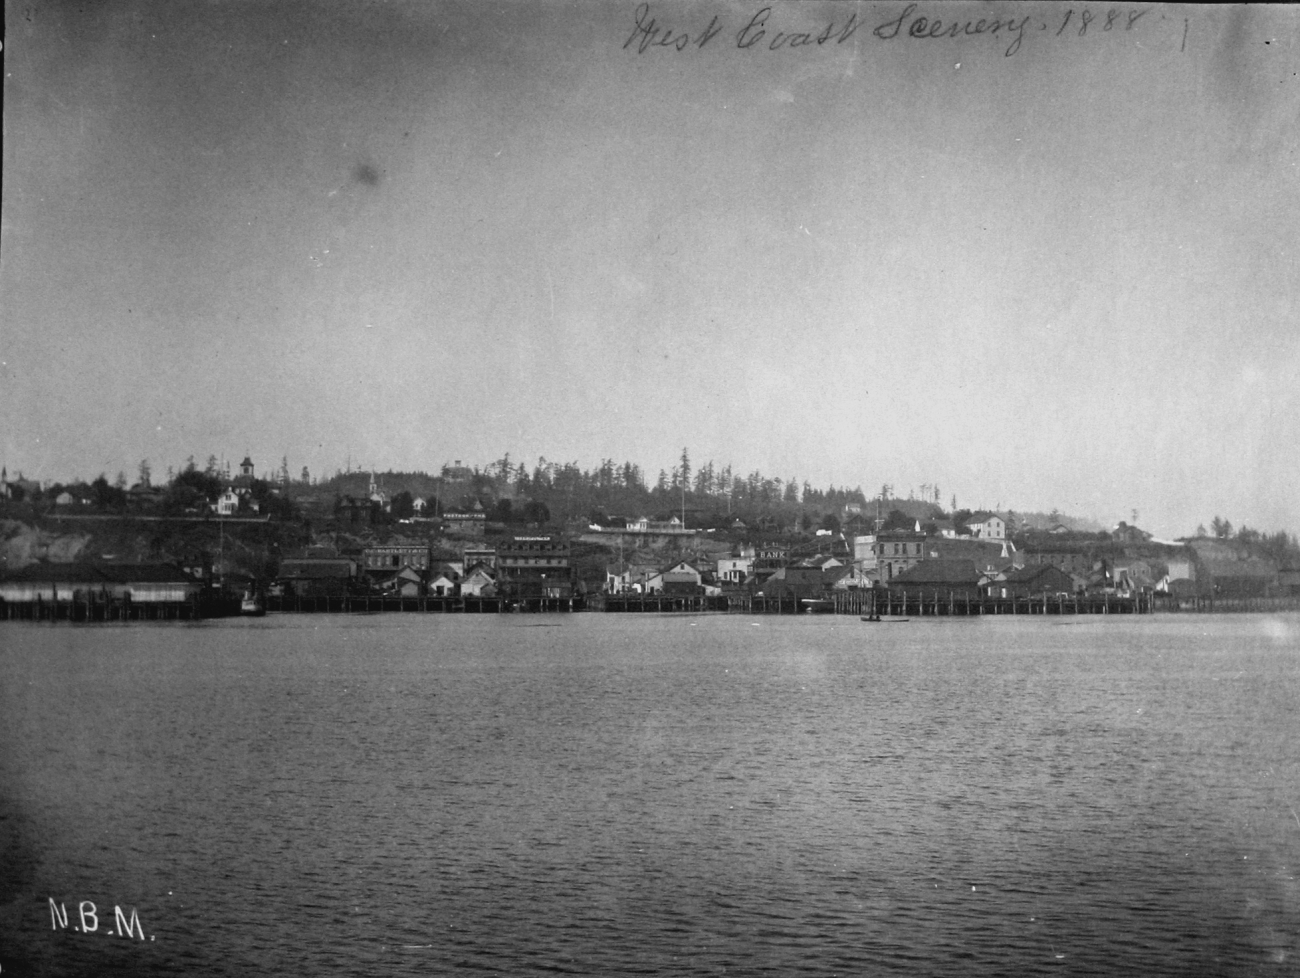 Seattle, WA, west coast scenery, 1888